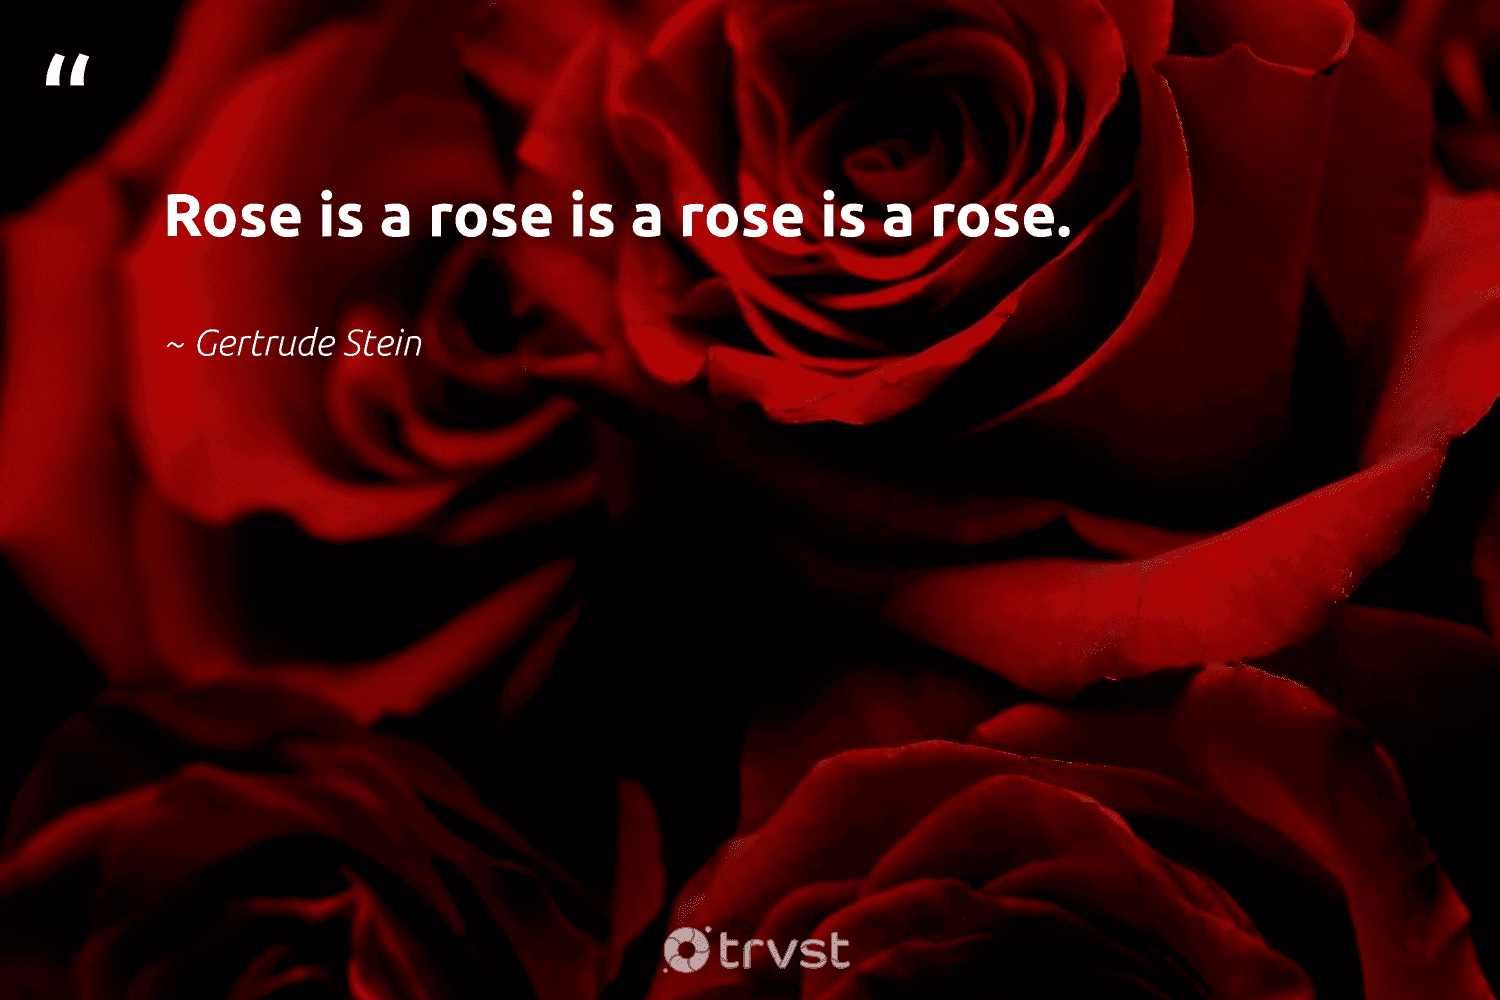 52 Inspiring Rose Quotes